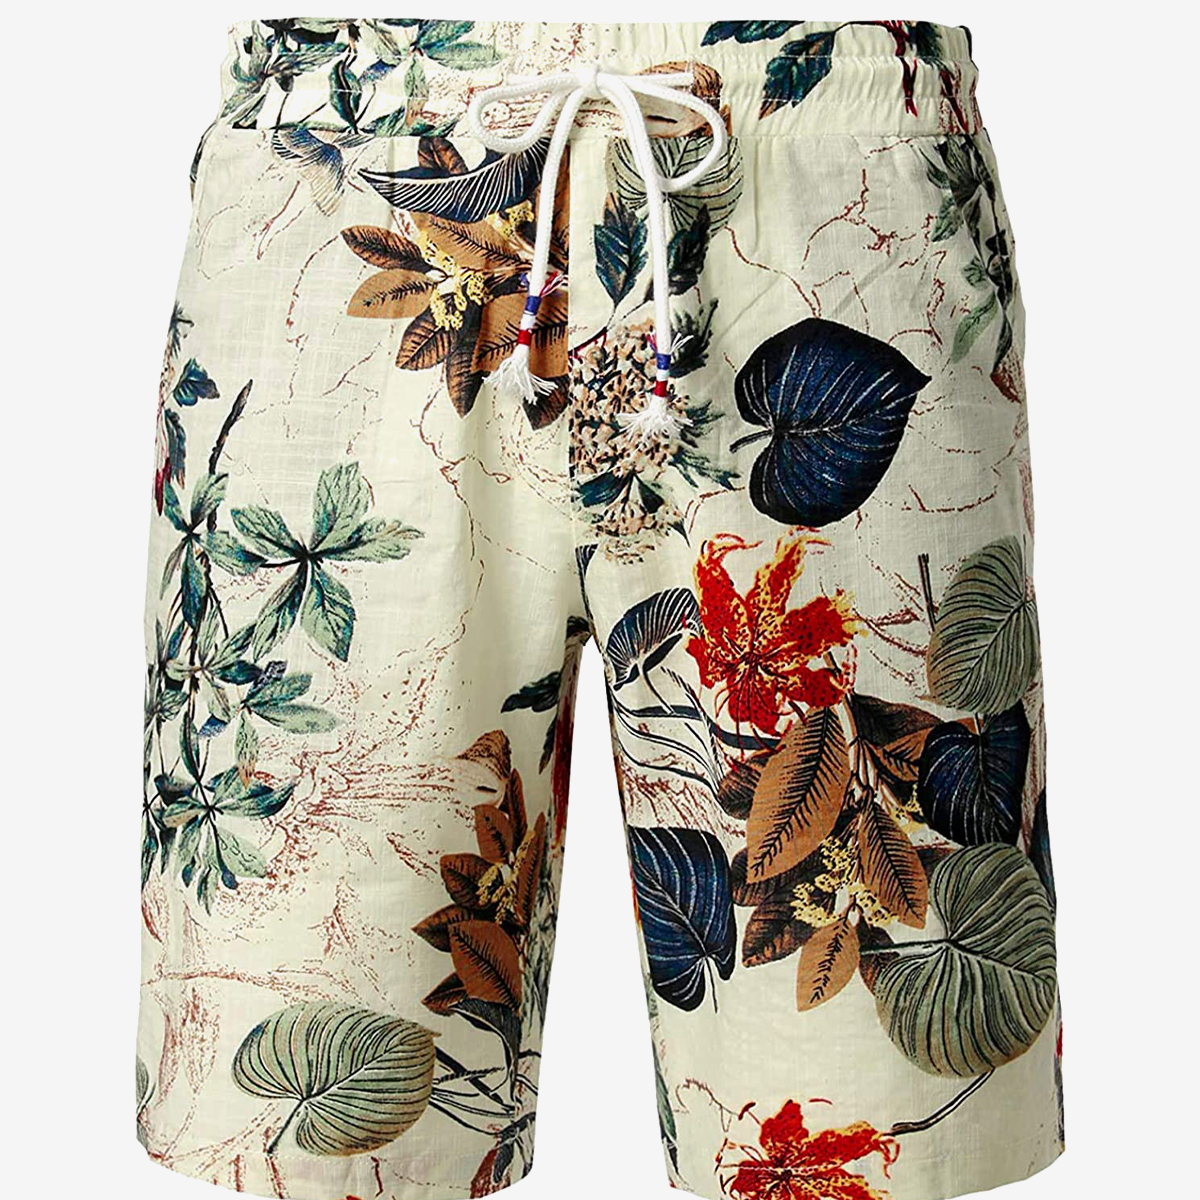 Men's Hawaiian Floral Print Casual Cotton Shorts